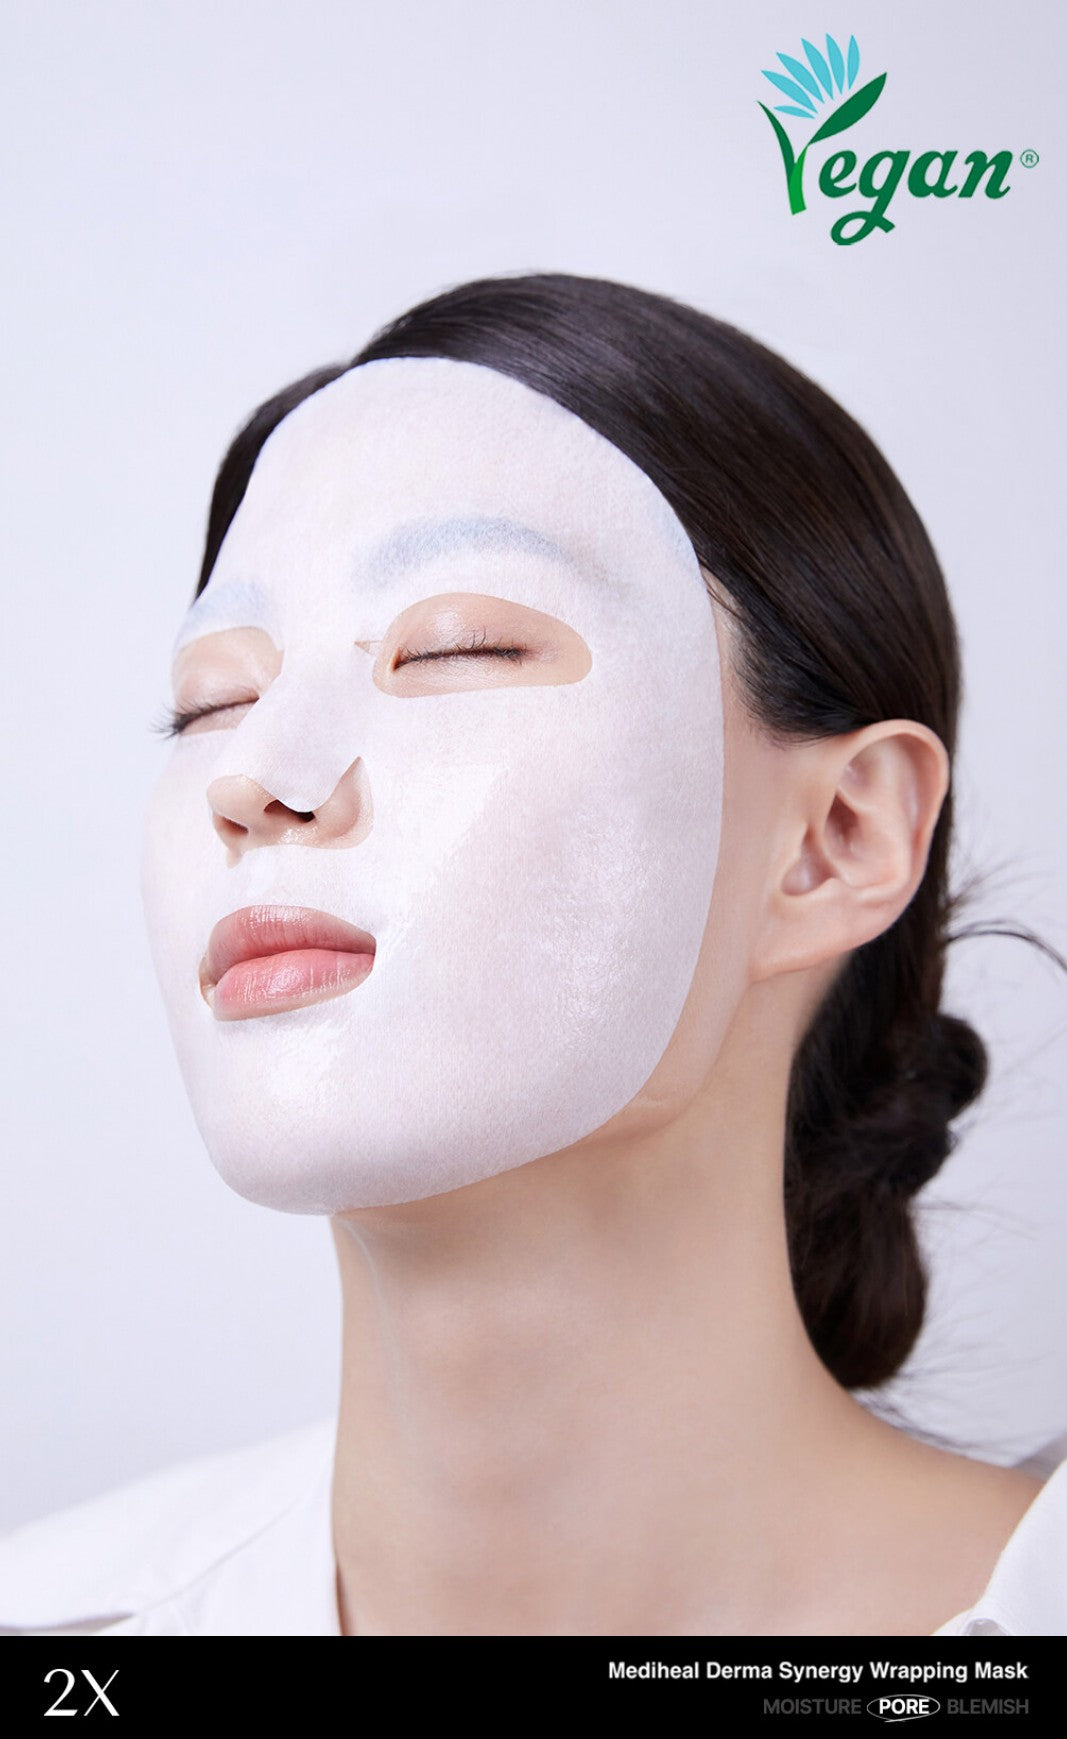 [Mediheal] Derma Synergy Wrapping Mask Blemish Care - Retinol x LHA 4EA